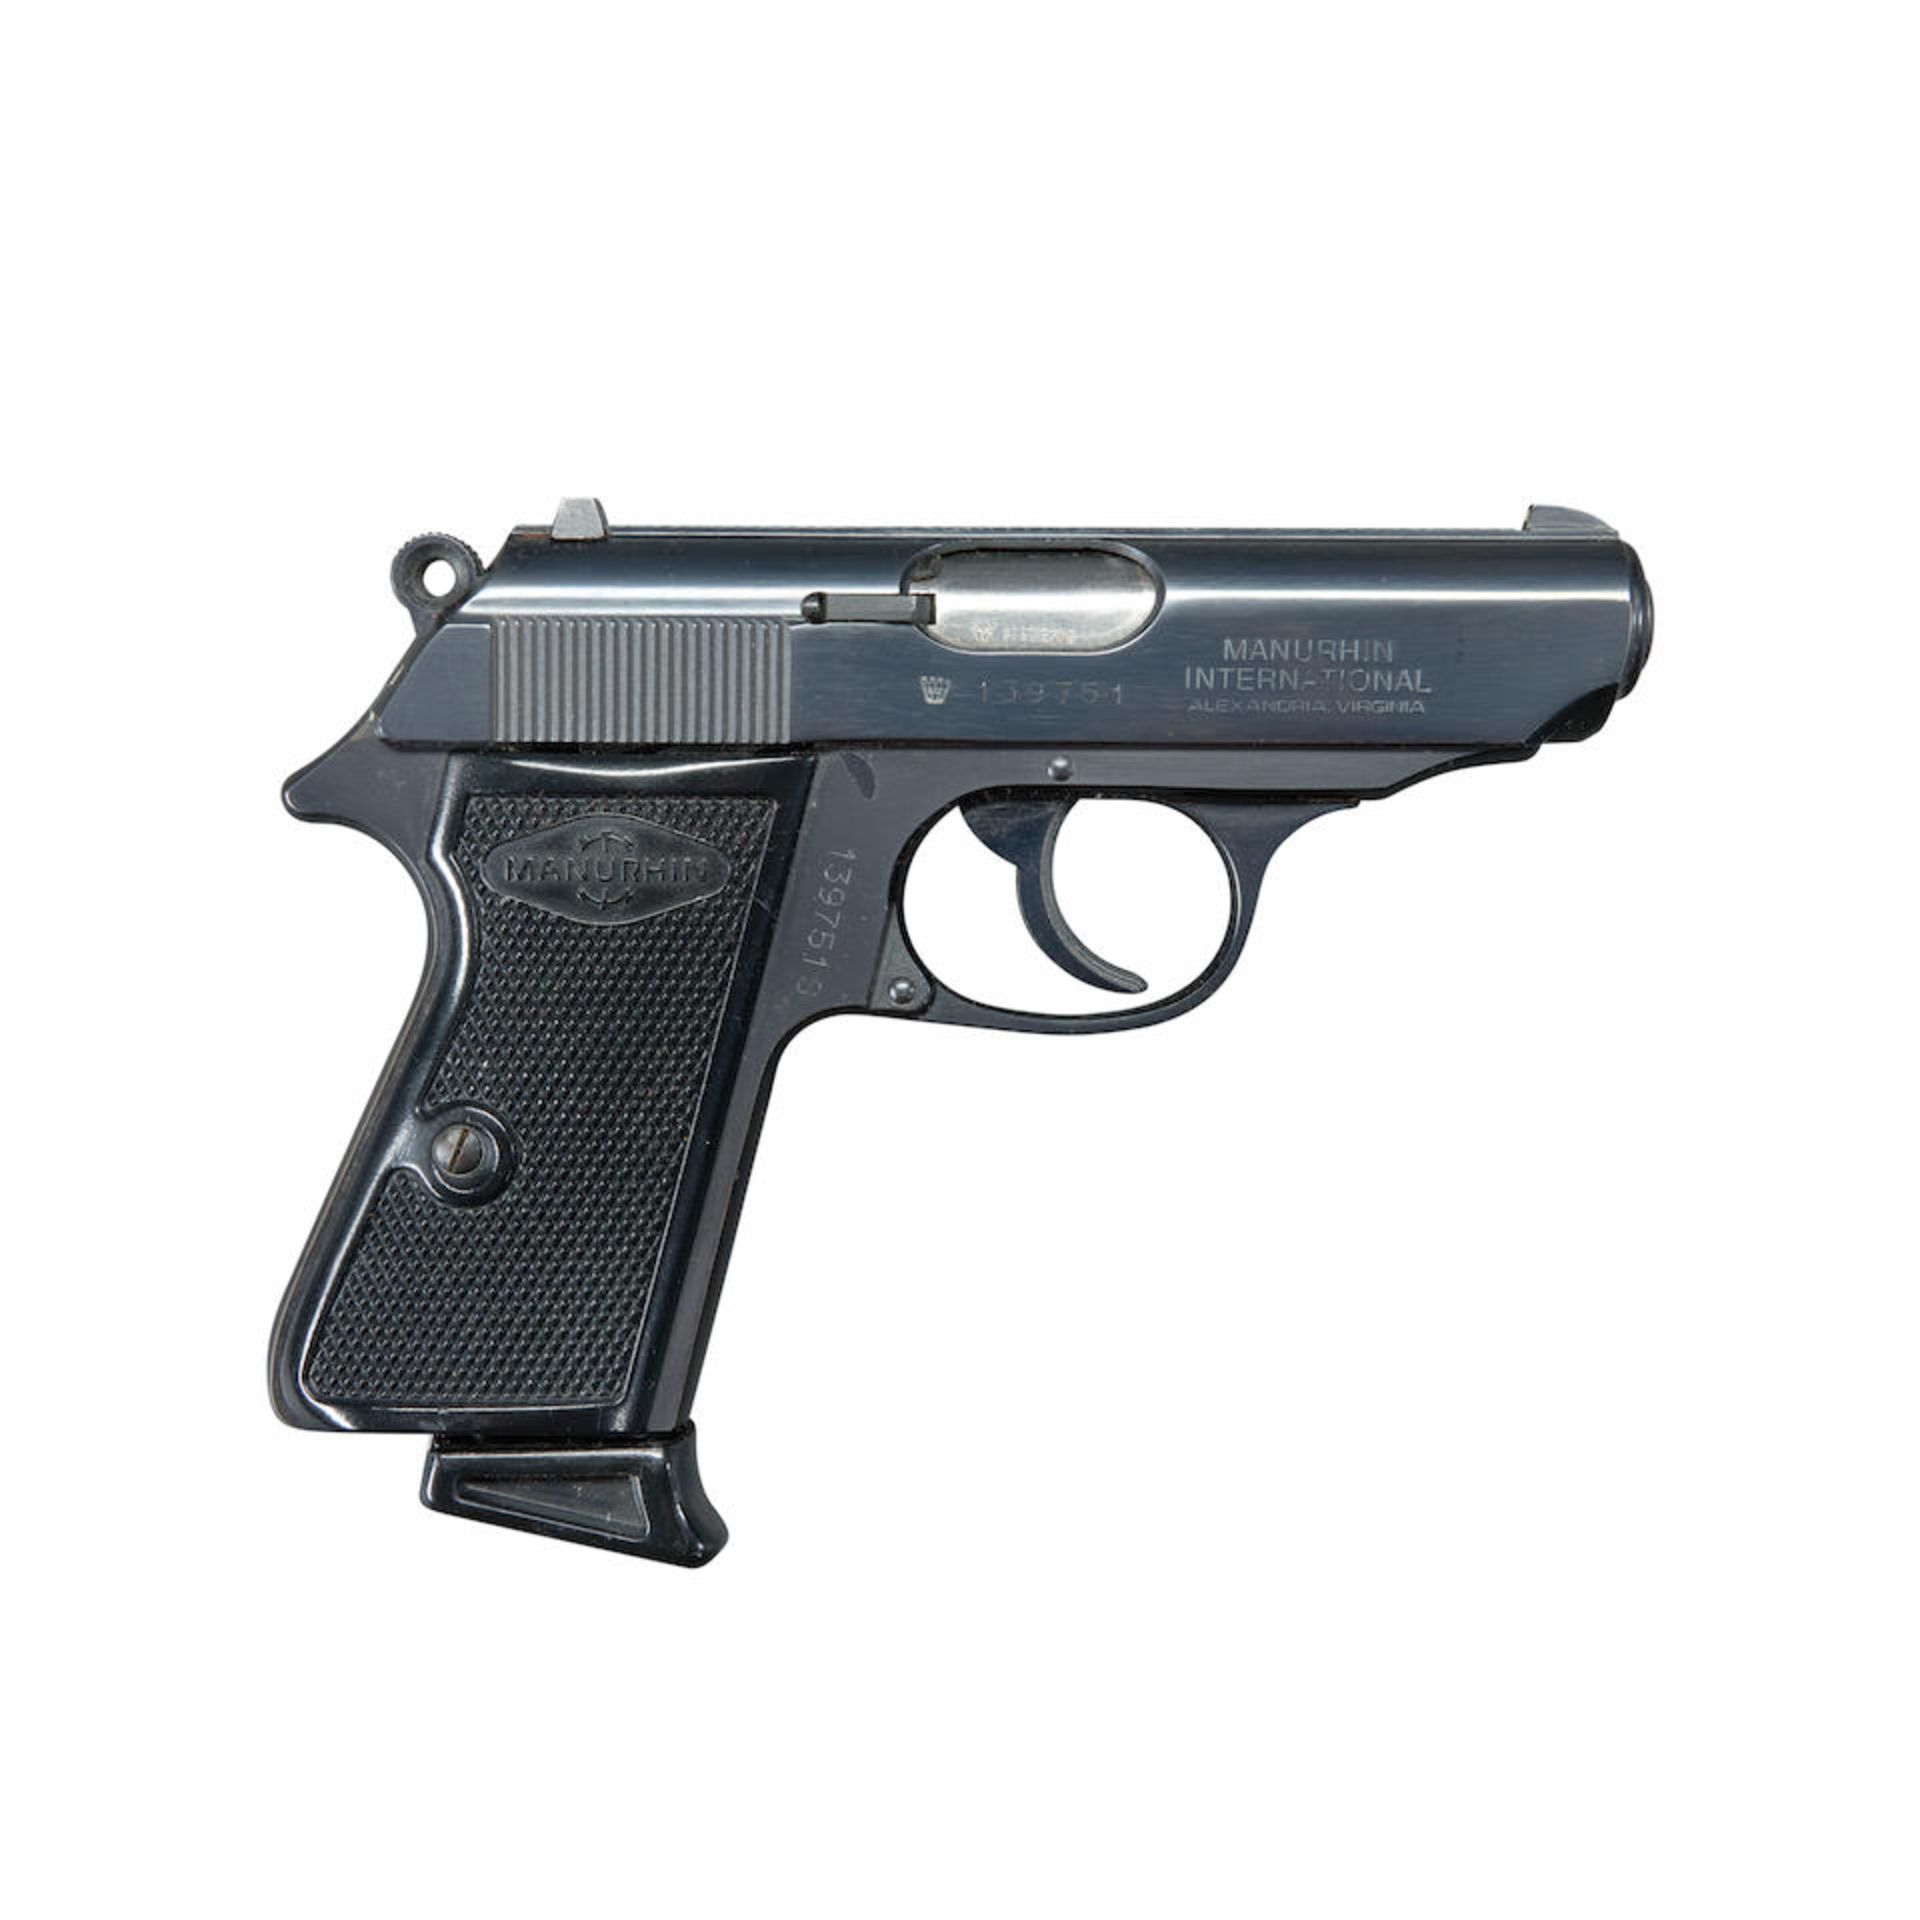 Manurhin Model PPK/S Semi-Automatic Pistol, Modern handgun - Image 3 of 3